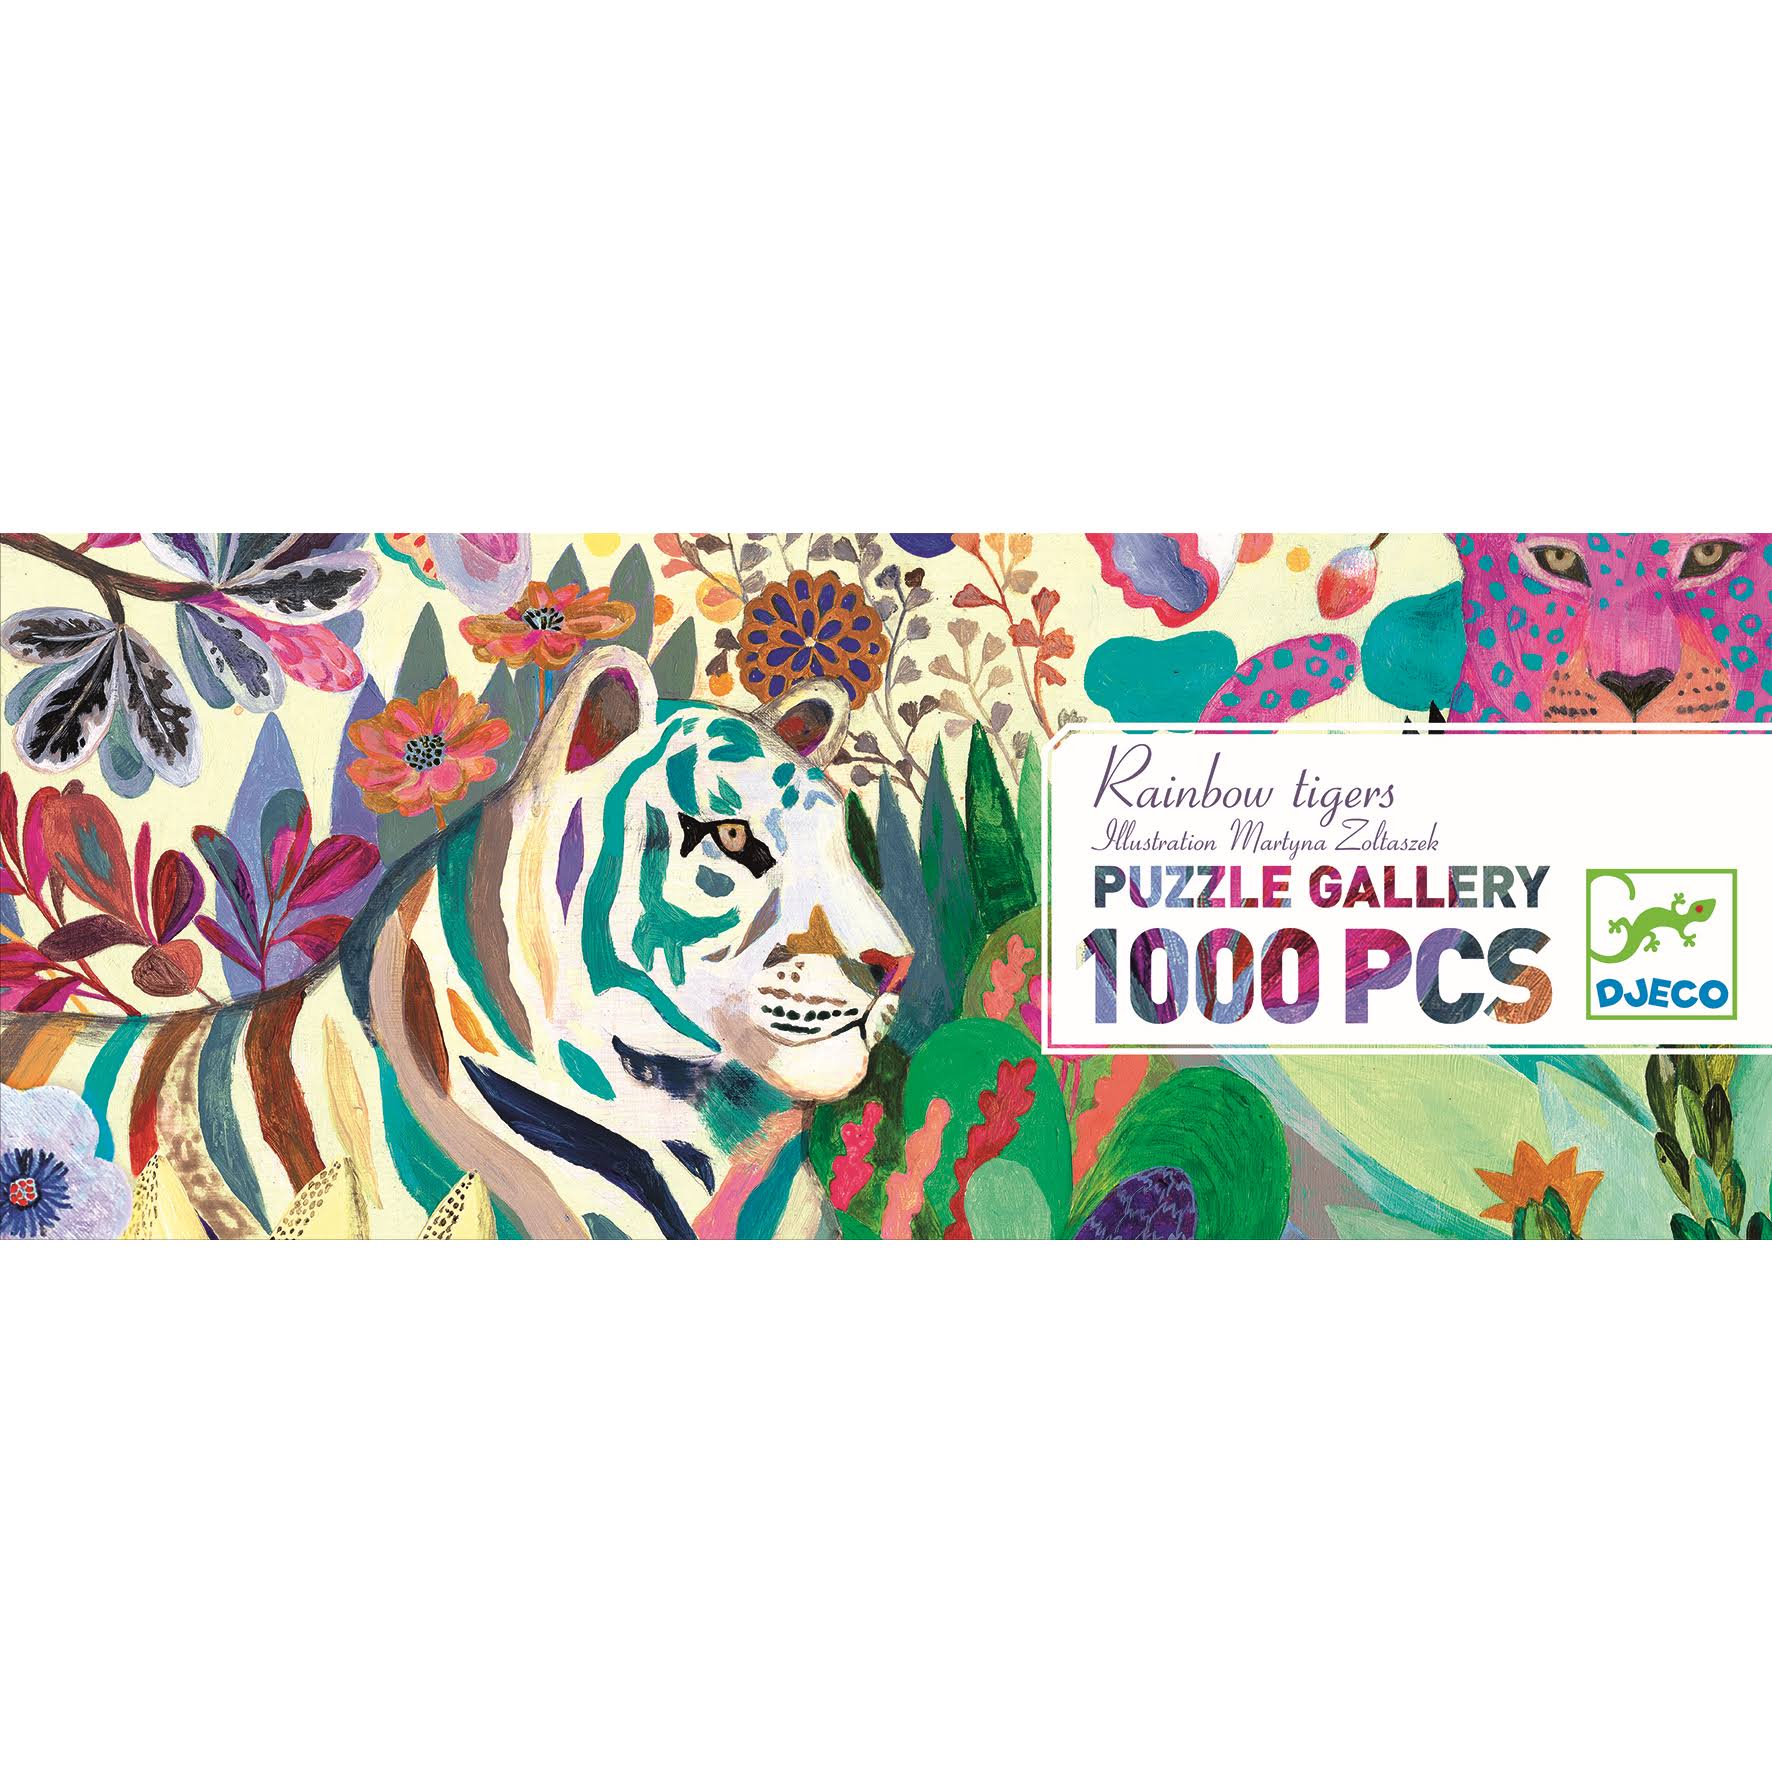 Djeco Puzzle Gallery Rainbow Tigers Jigsaw Puzzle - 1000pcs